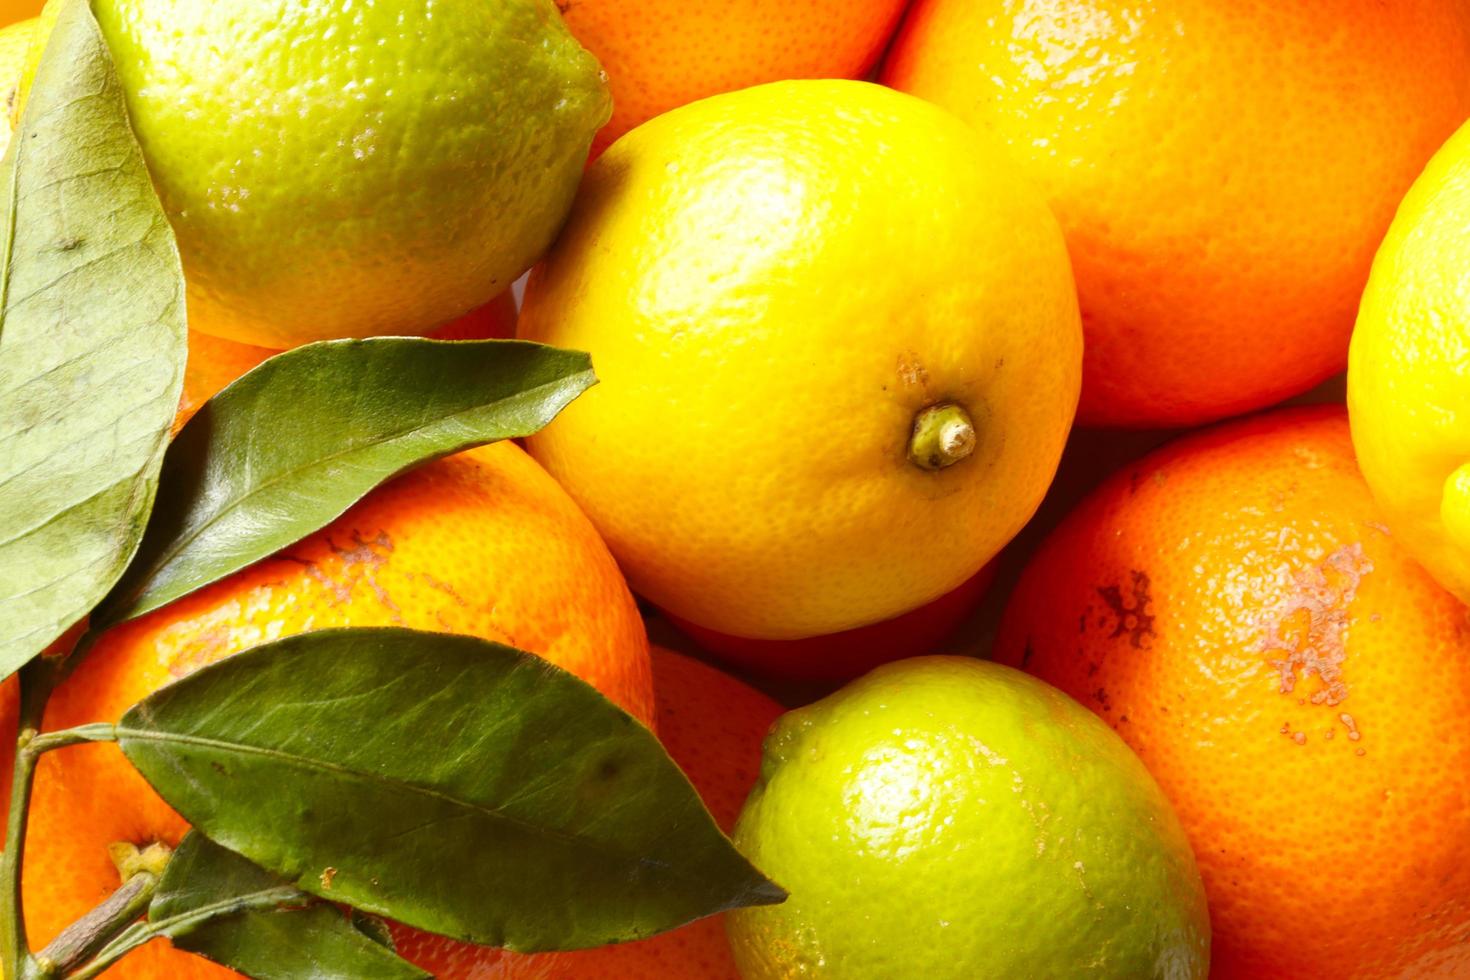 verschillende citrusvruchten foto